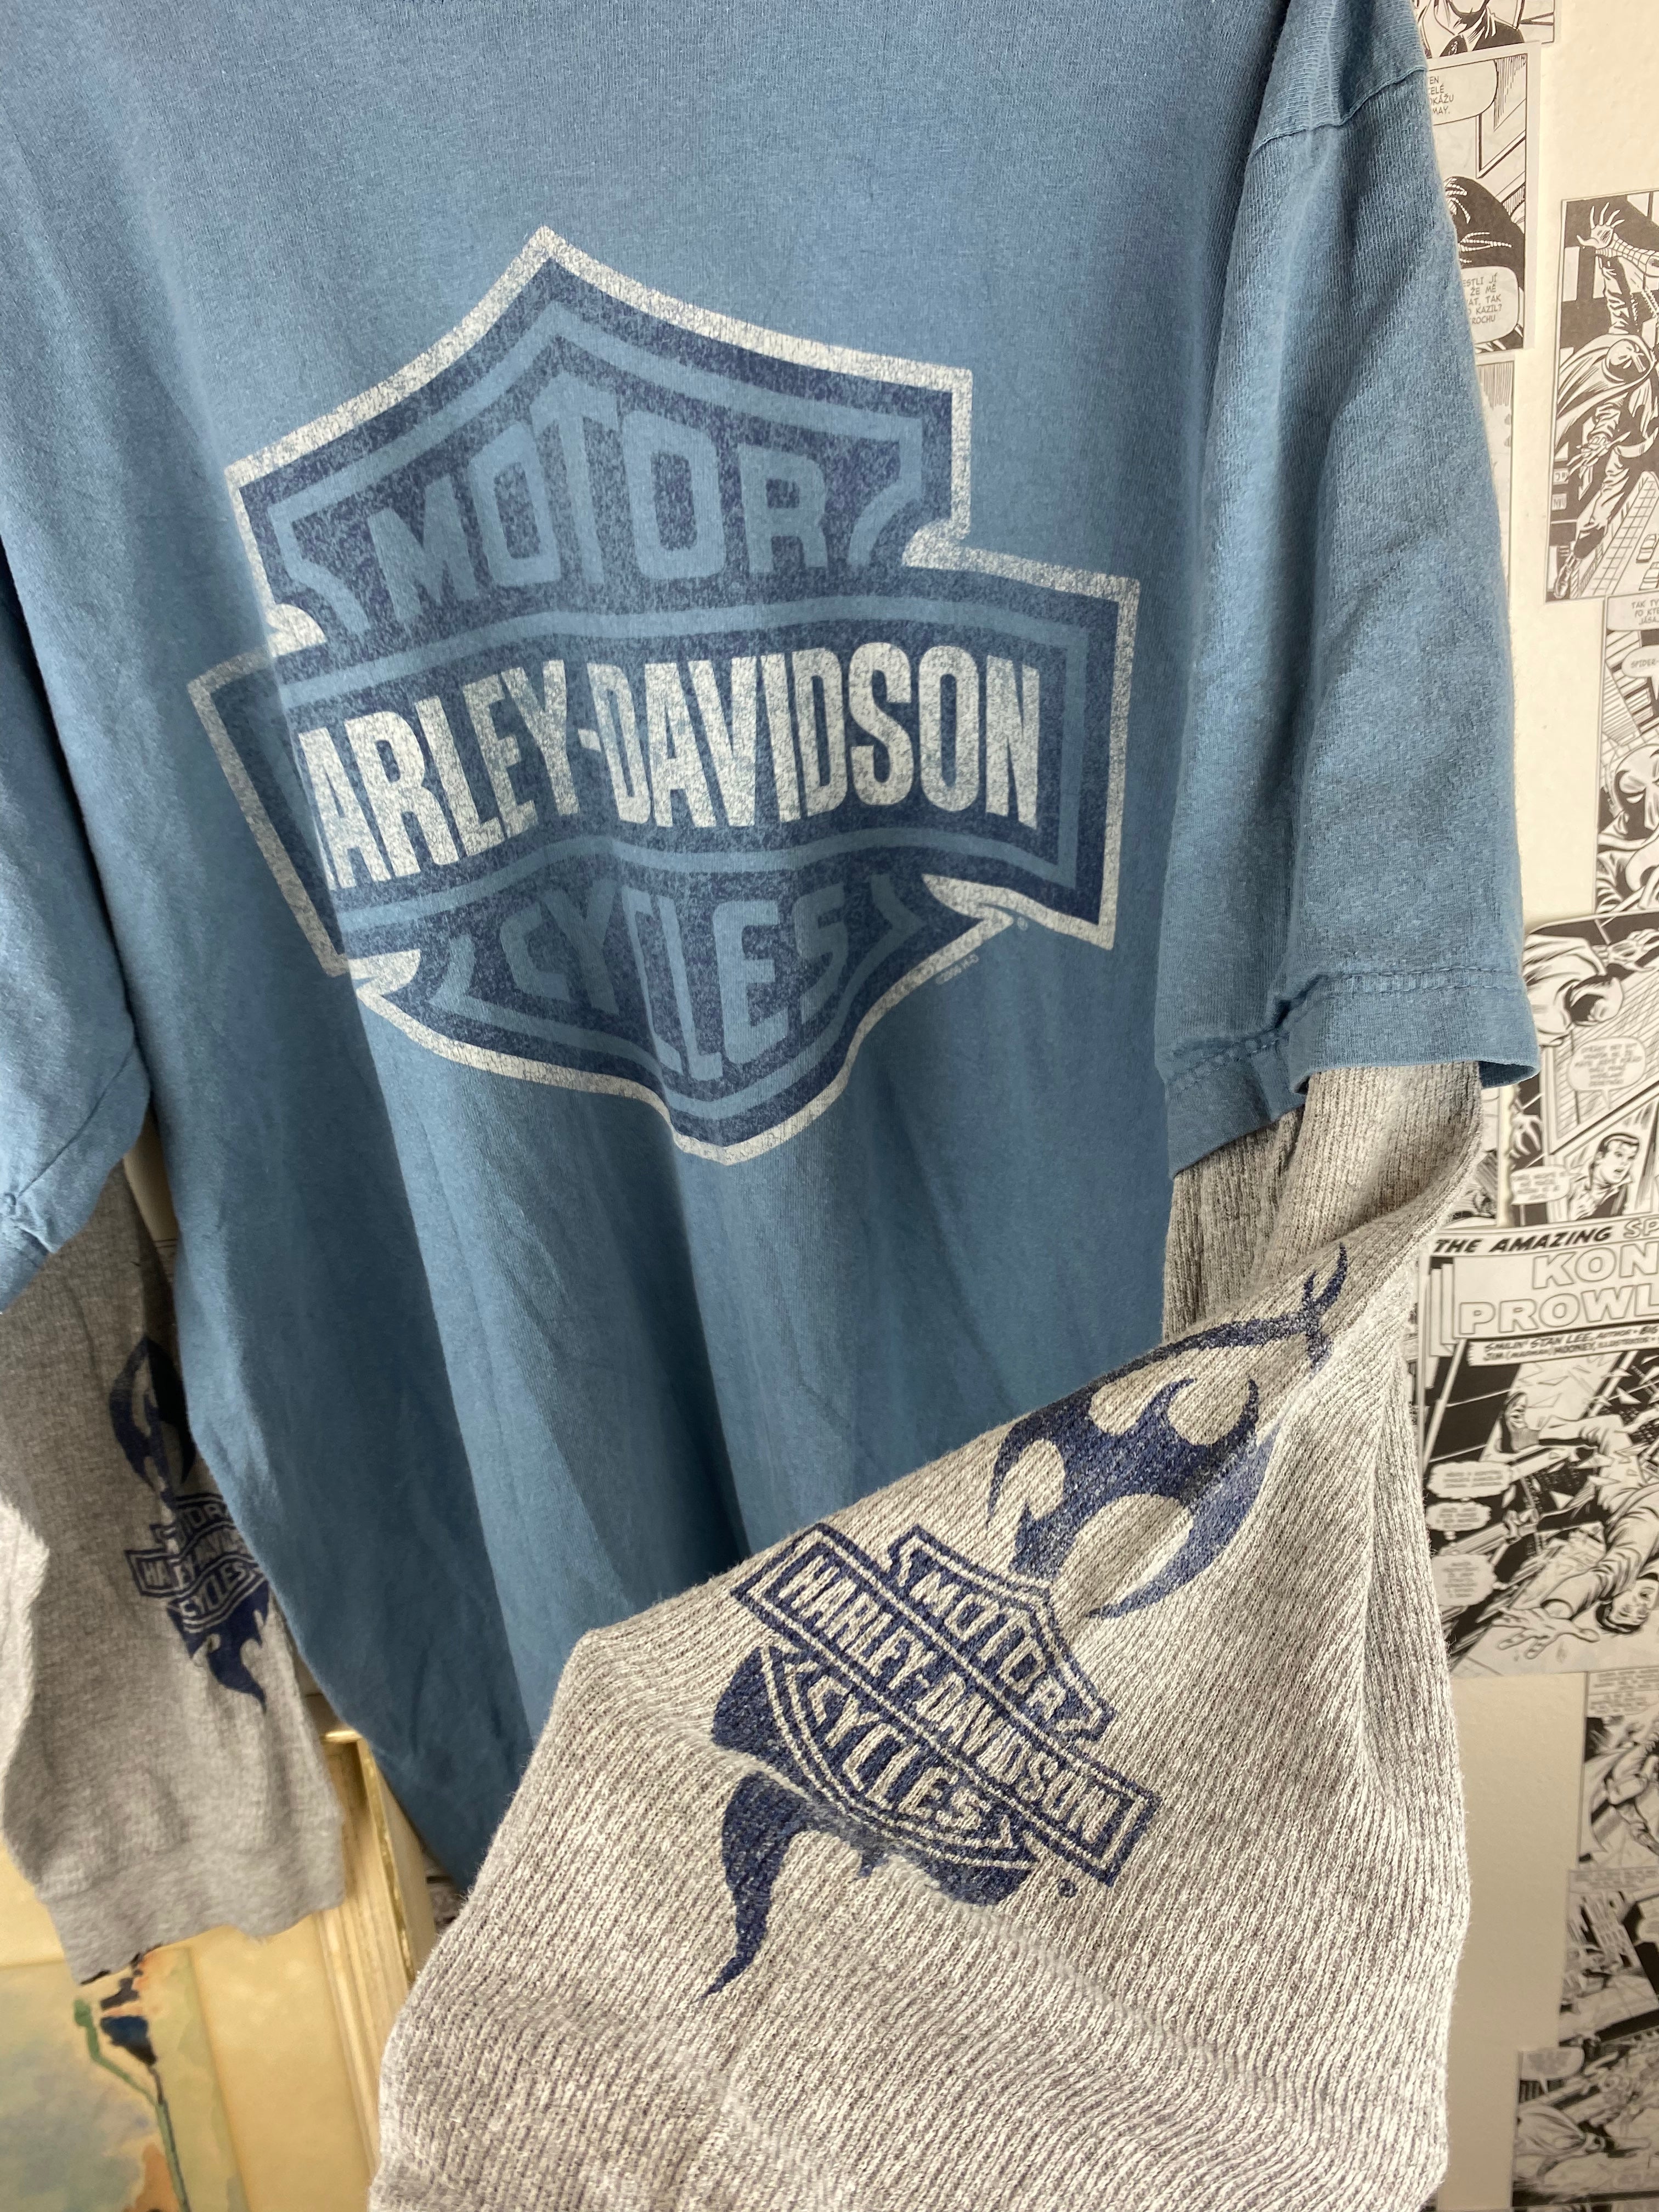 Vintage Harley Davidson “Indiana” long sleeve t-shirt